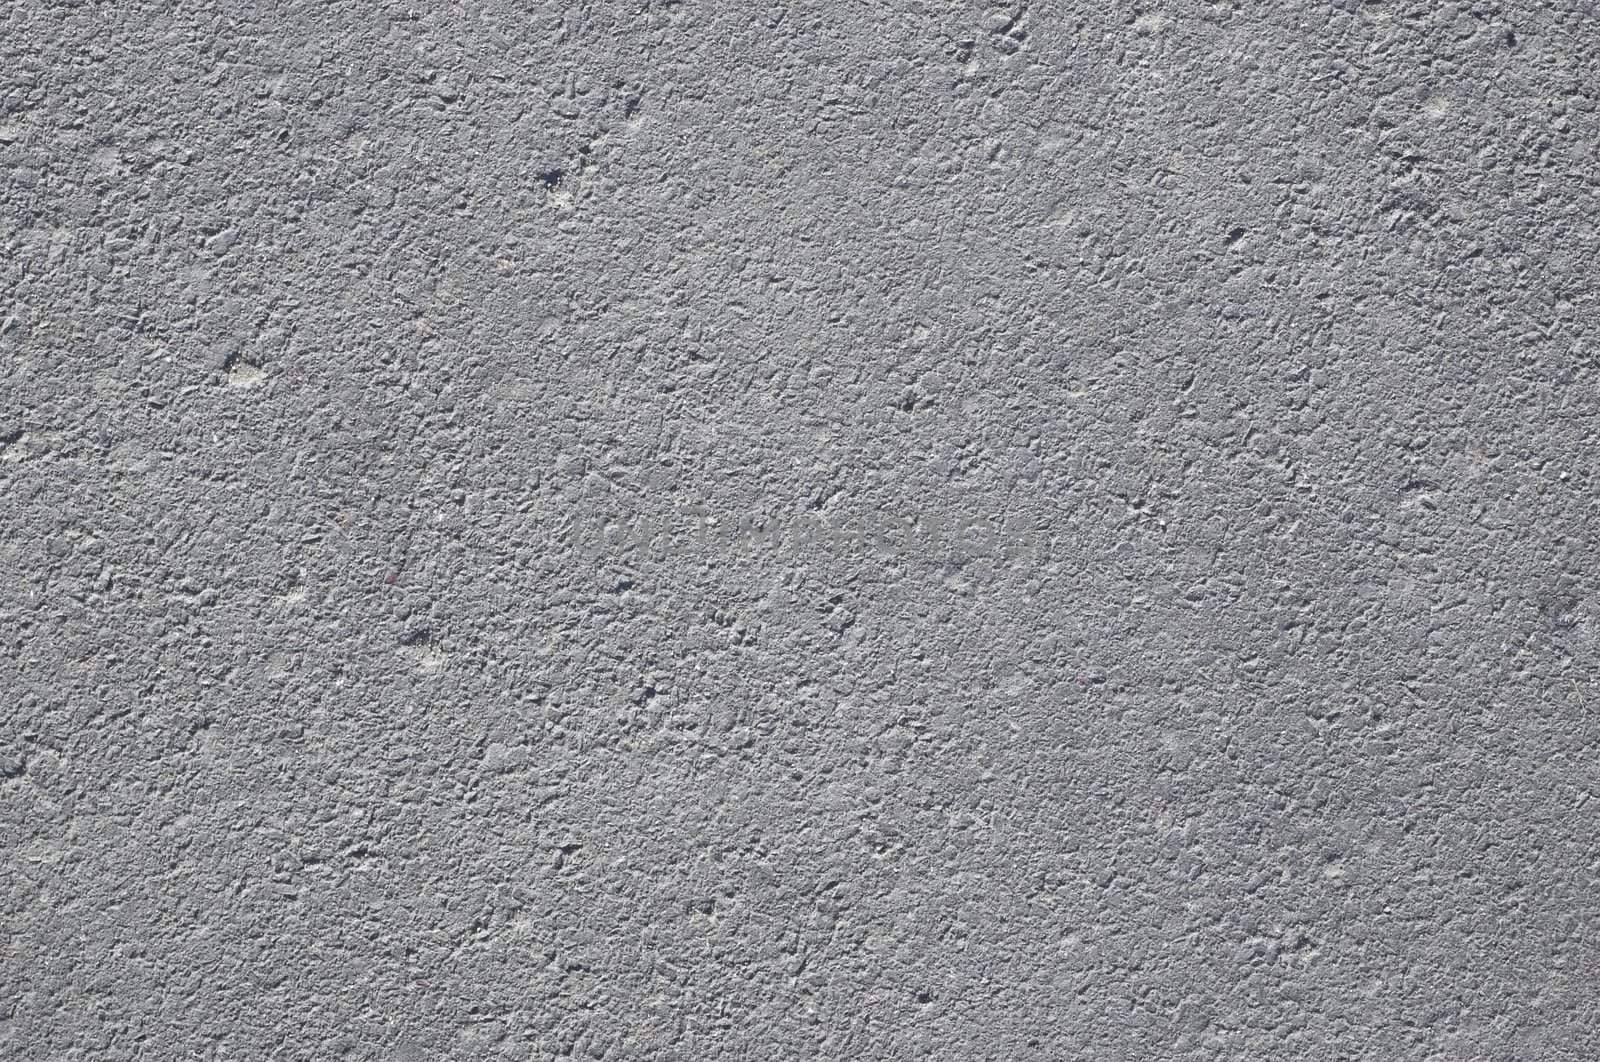 dusty asphalt texture #2 by starush